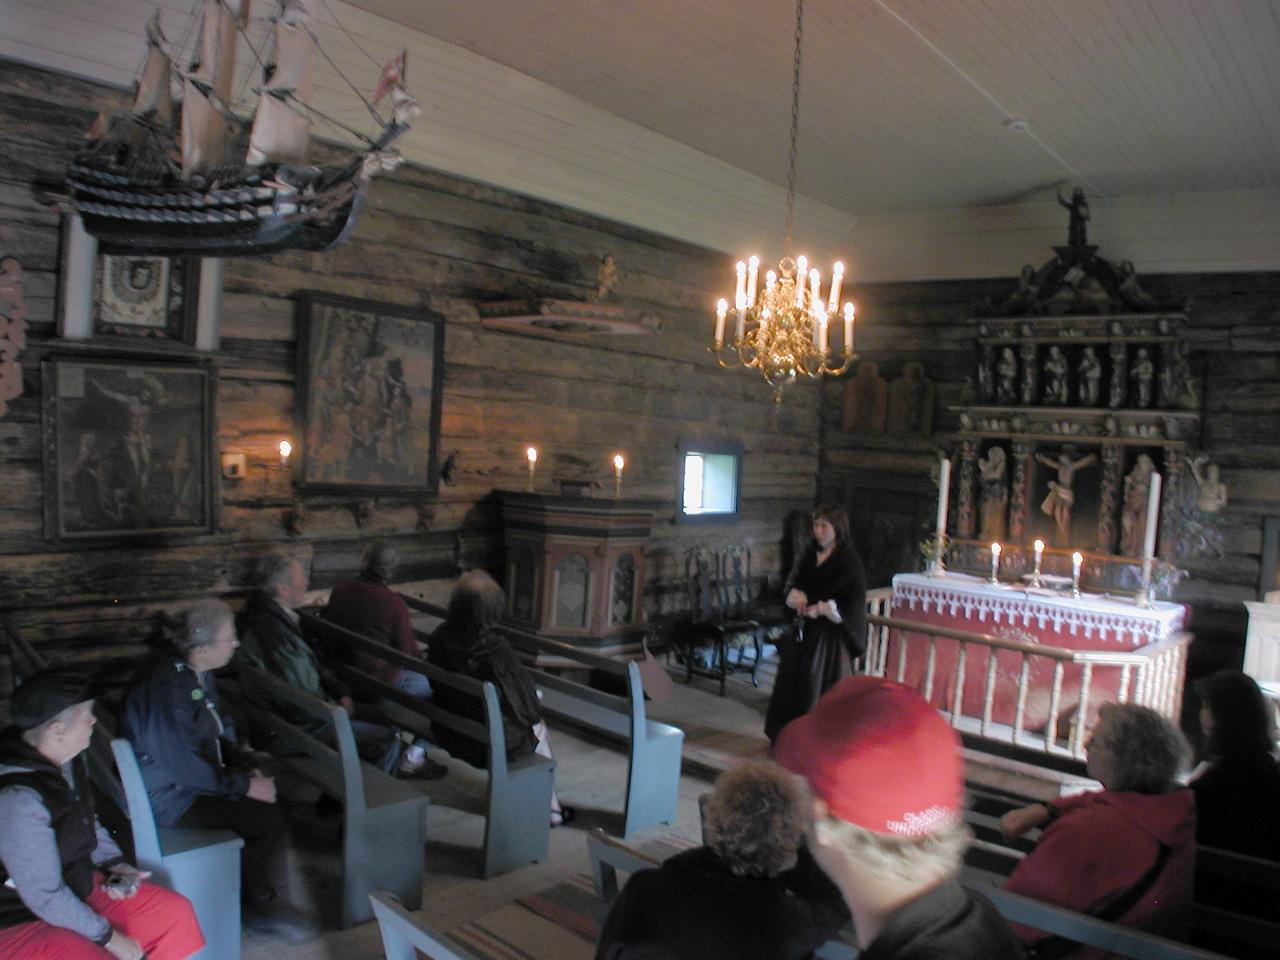 KPLU Viking Jazz: Inside Romsdalmuseet church